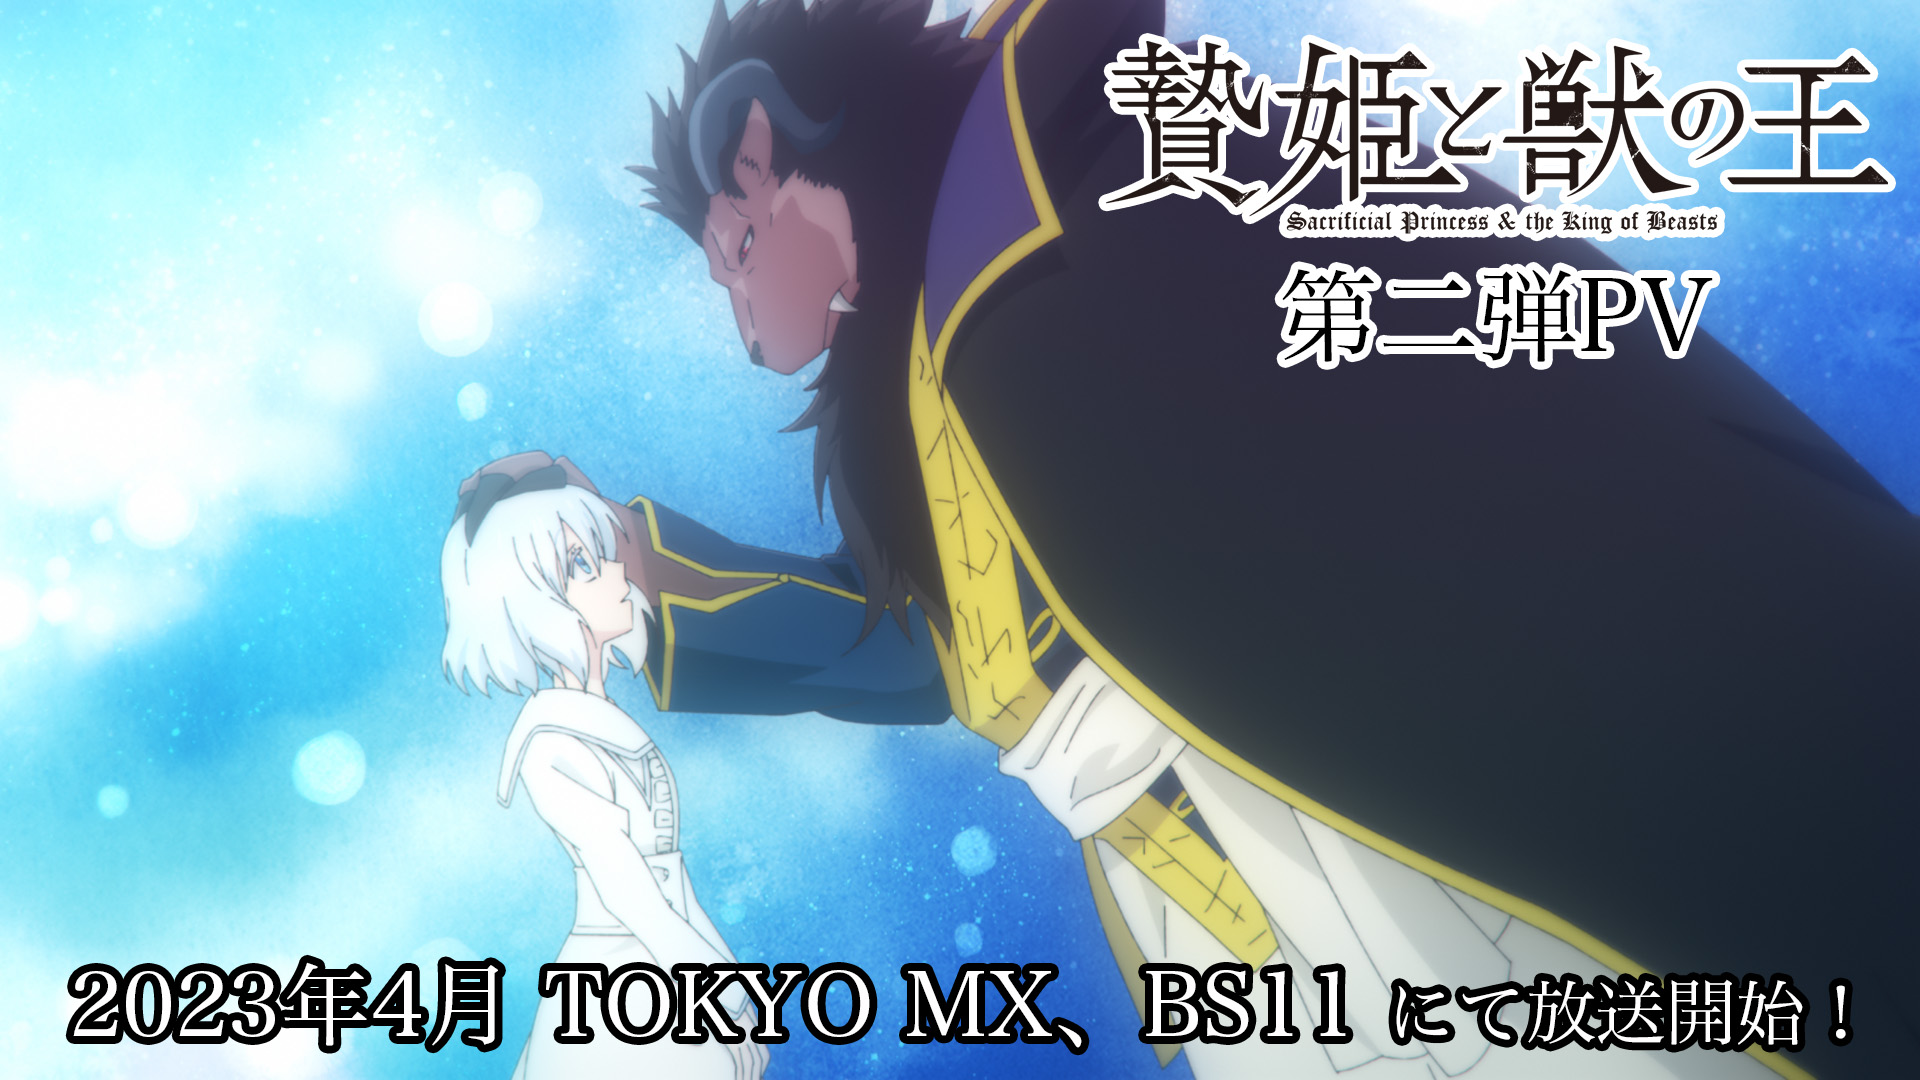 TVアニメ「贄姫と獣の王」第二弾PV！2023年4月 TOKYO MX、BS11 にて放送開始！